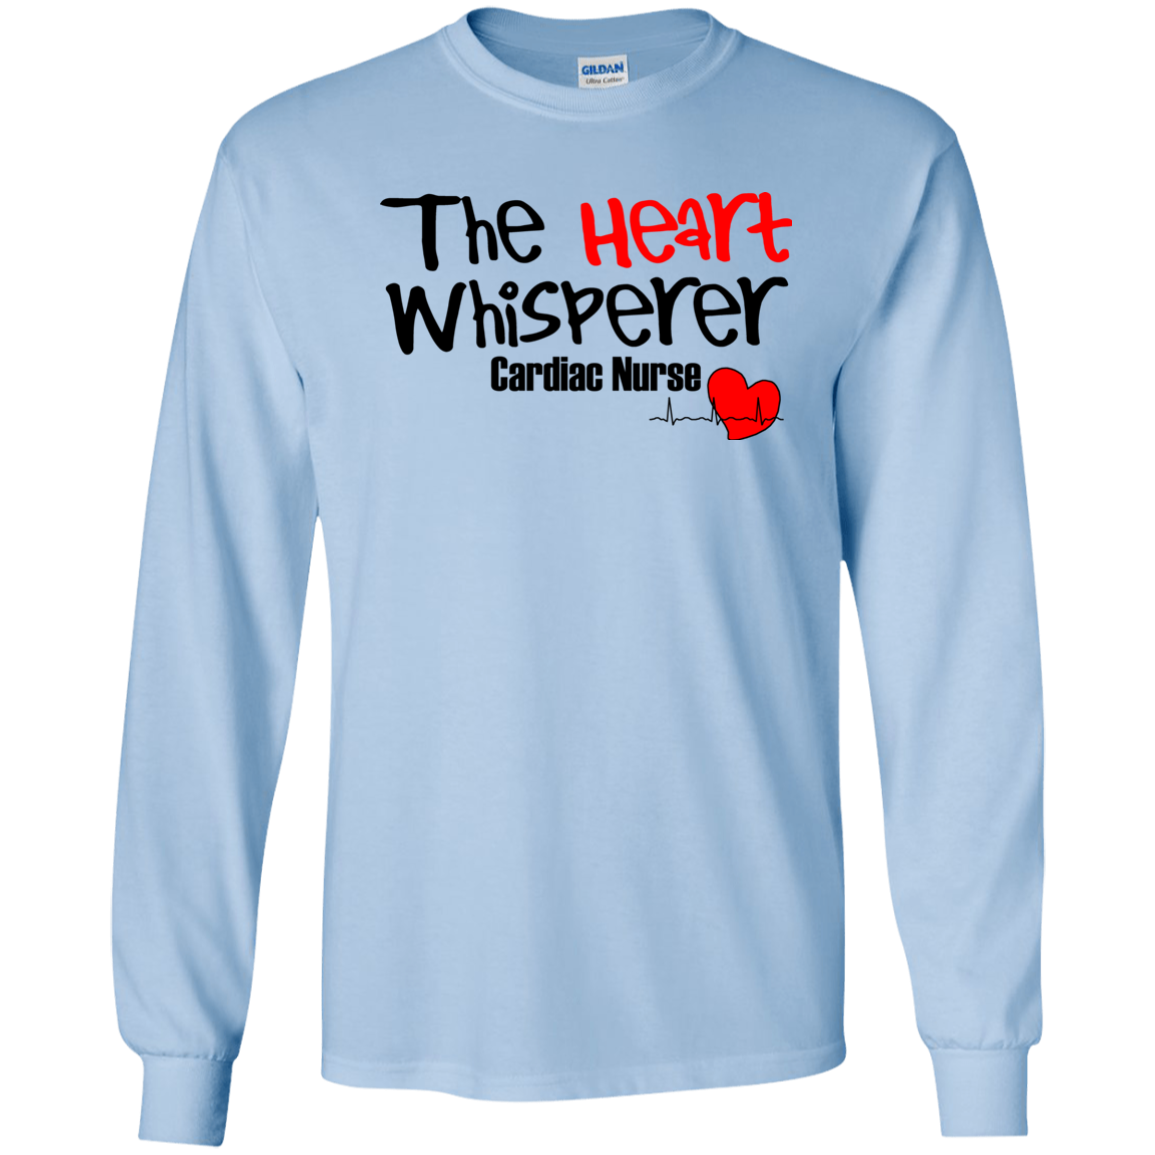 The Heart Whisperer Cardiac Nurse